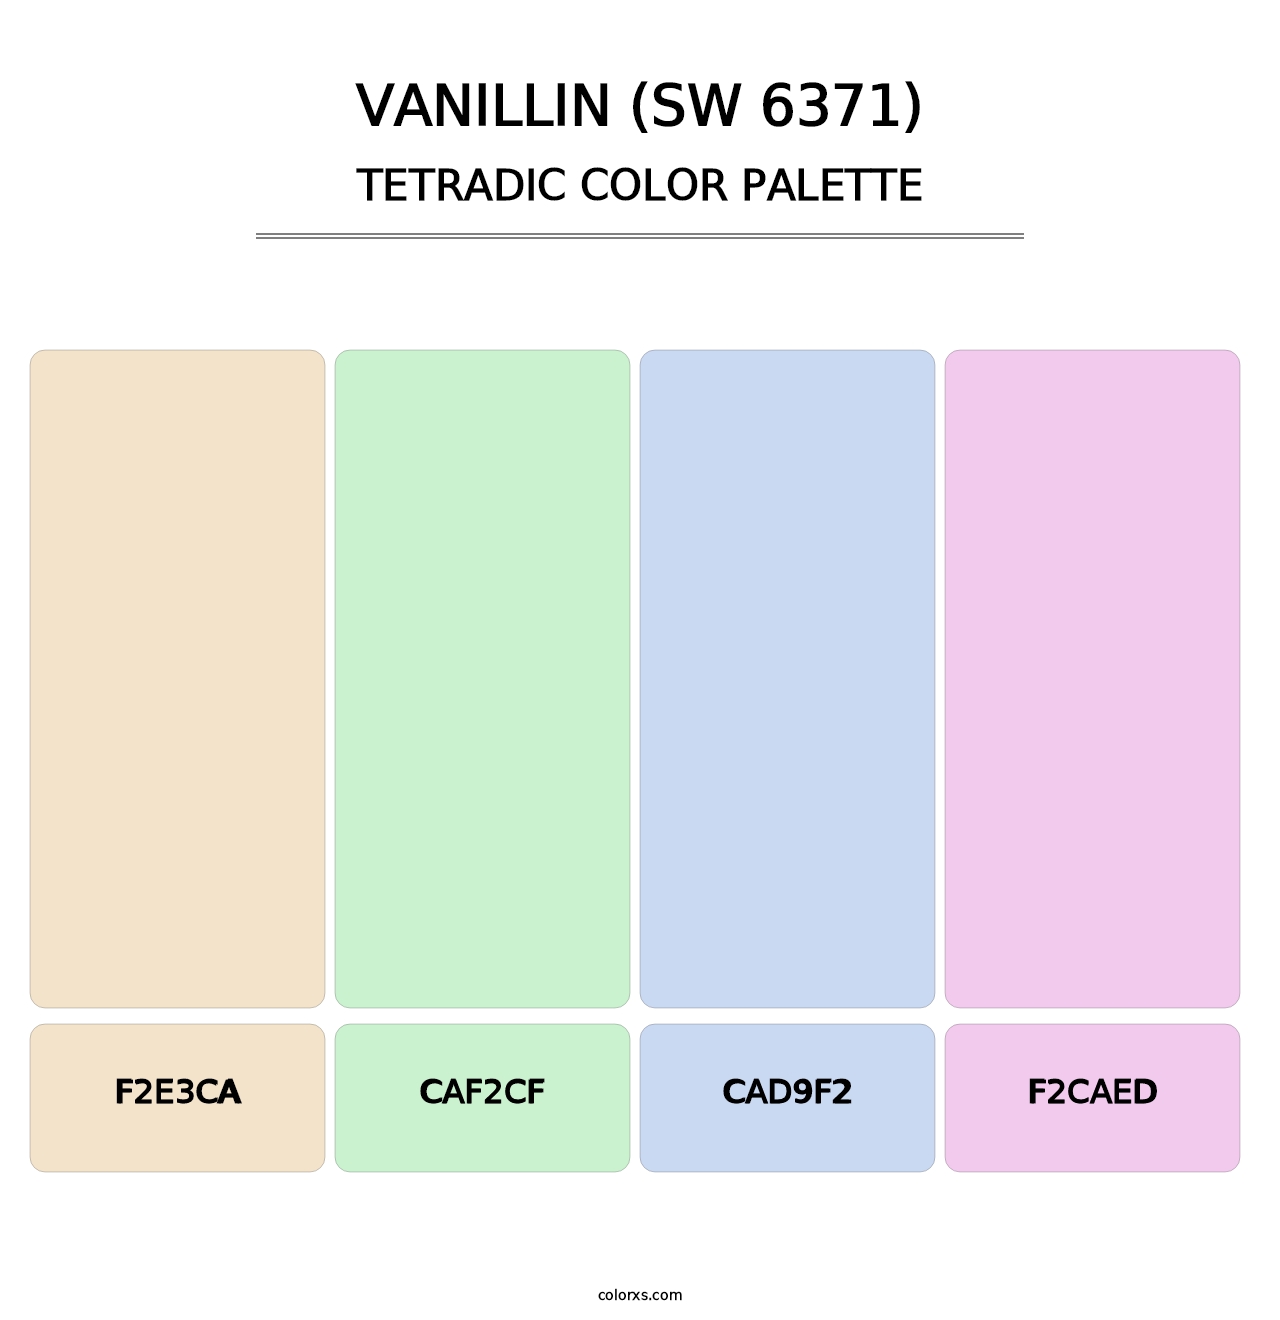 Vanillin (SW 6371) - Tetradic Color Palette